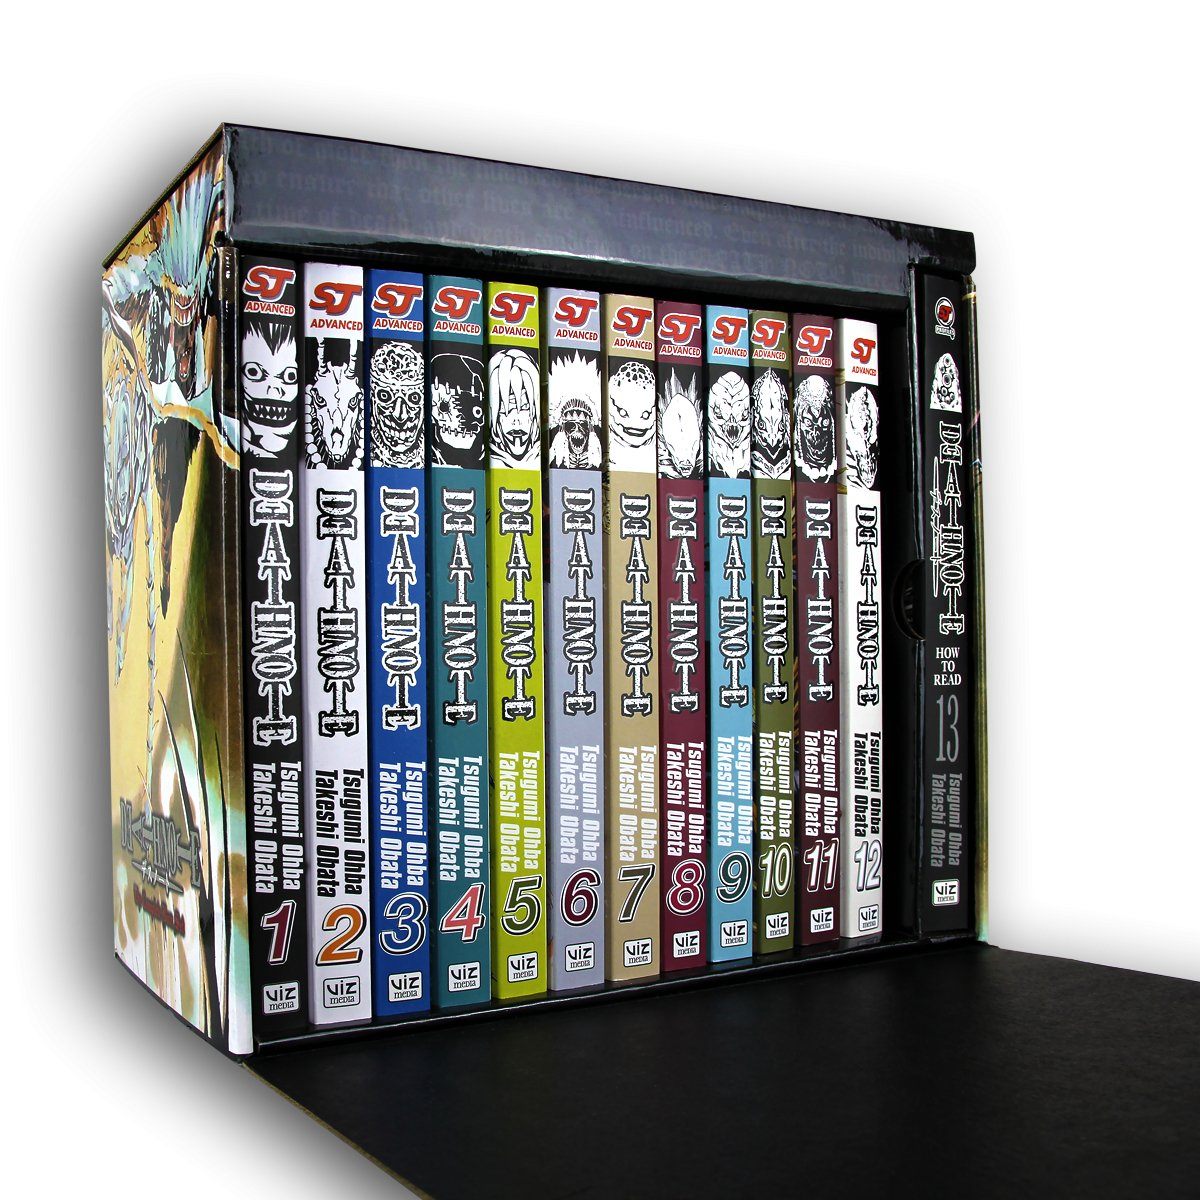 Death Note: The Complete Box Set by Tsugumi Ohba & Takeshi Obata